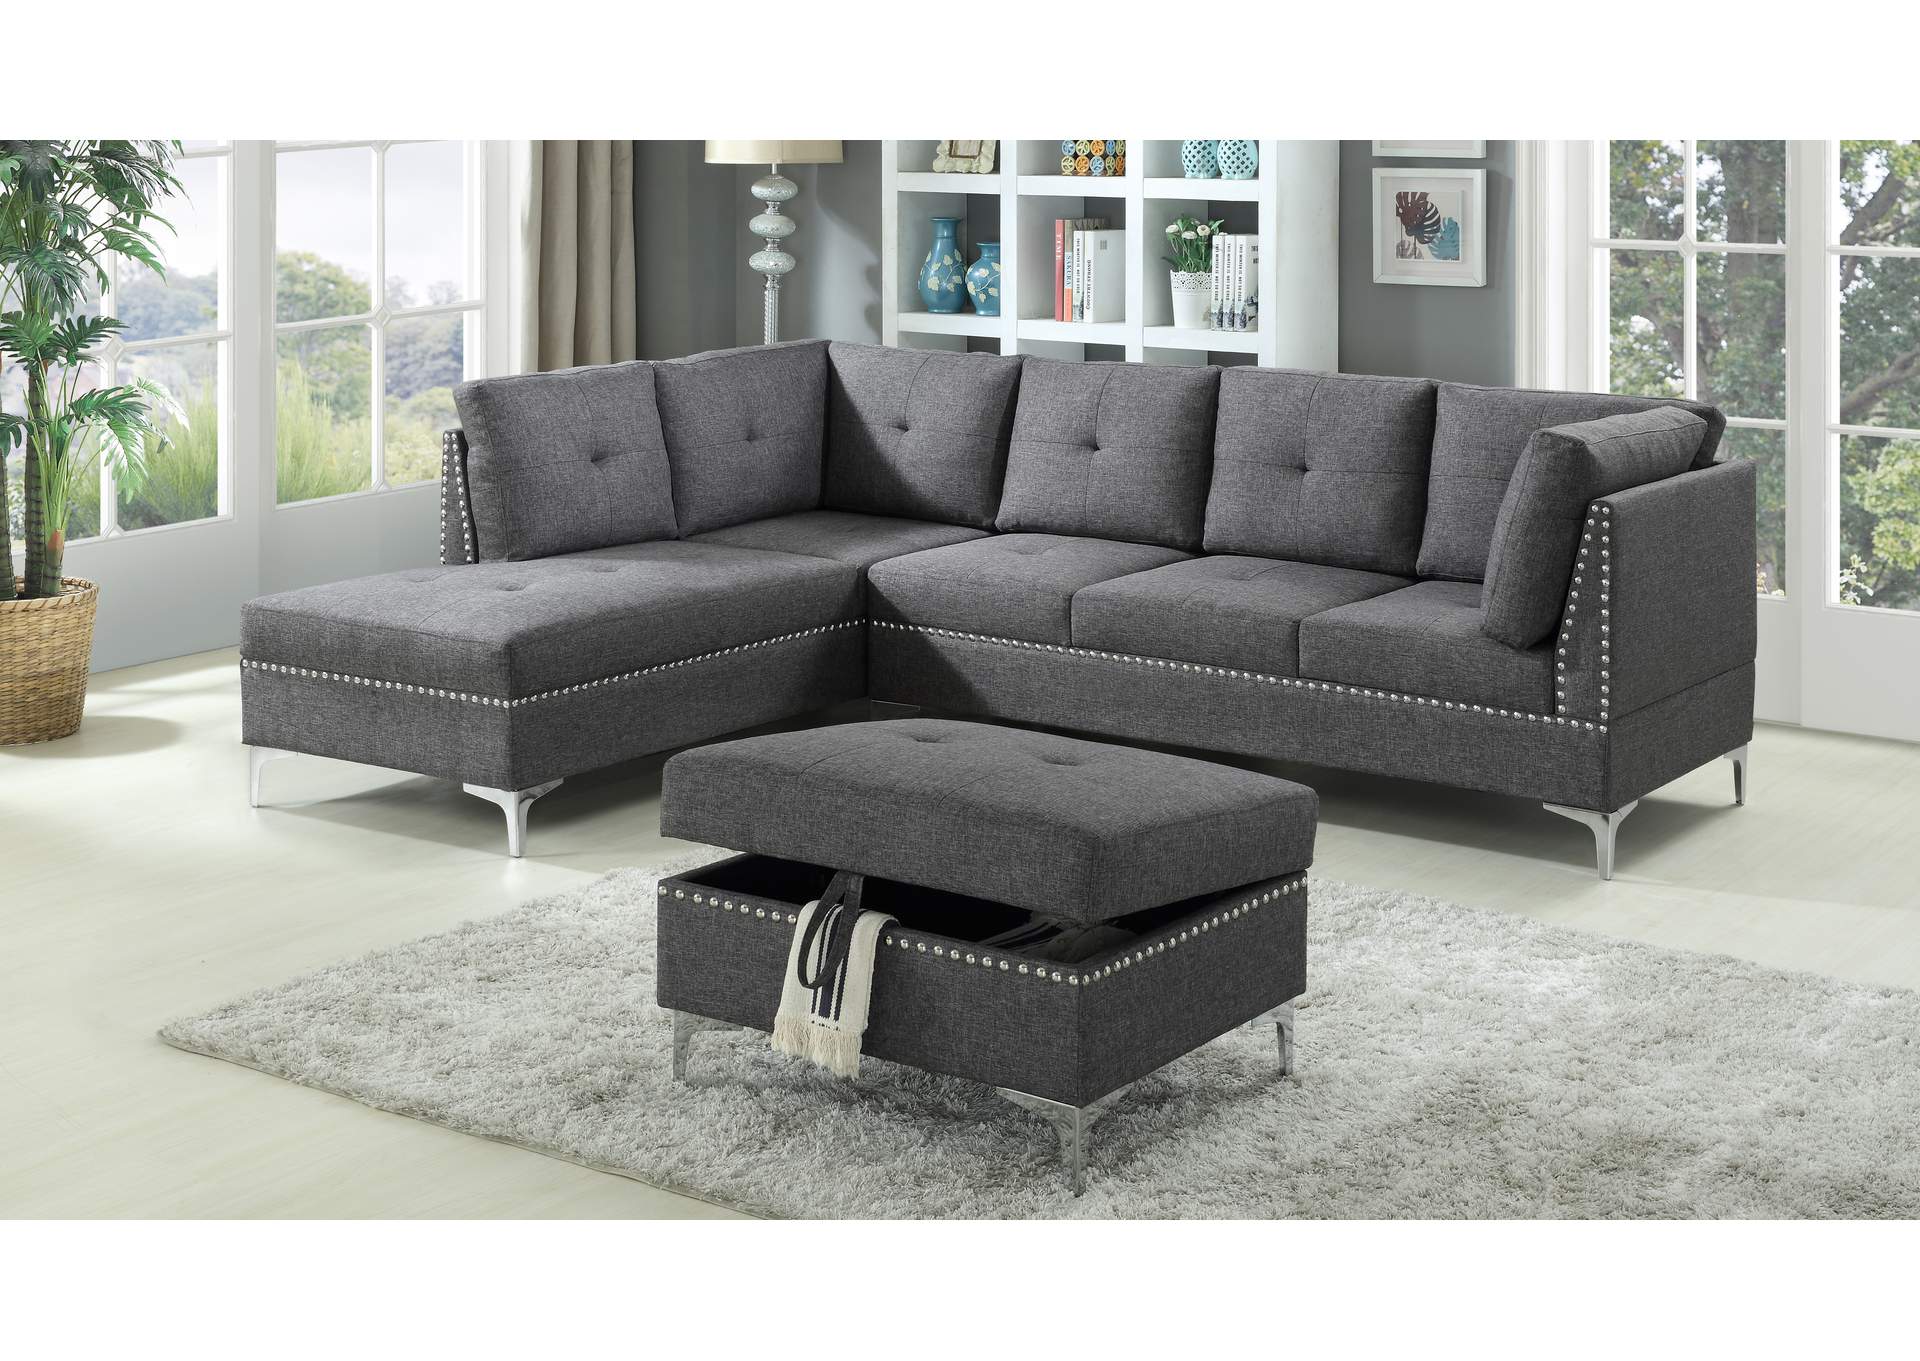 U5034 Grey Sectional Sofa,Global Trading